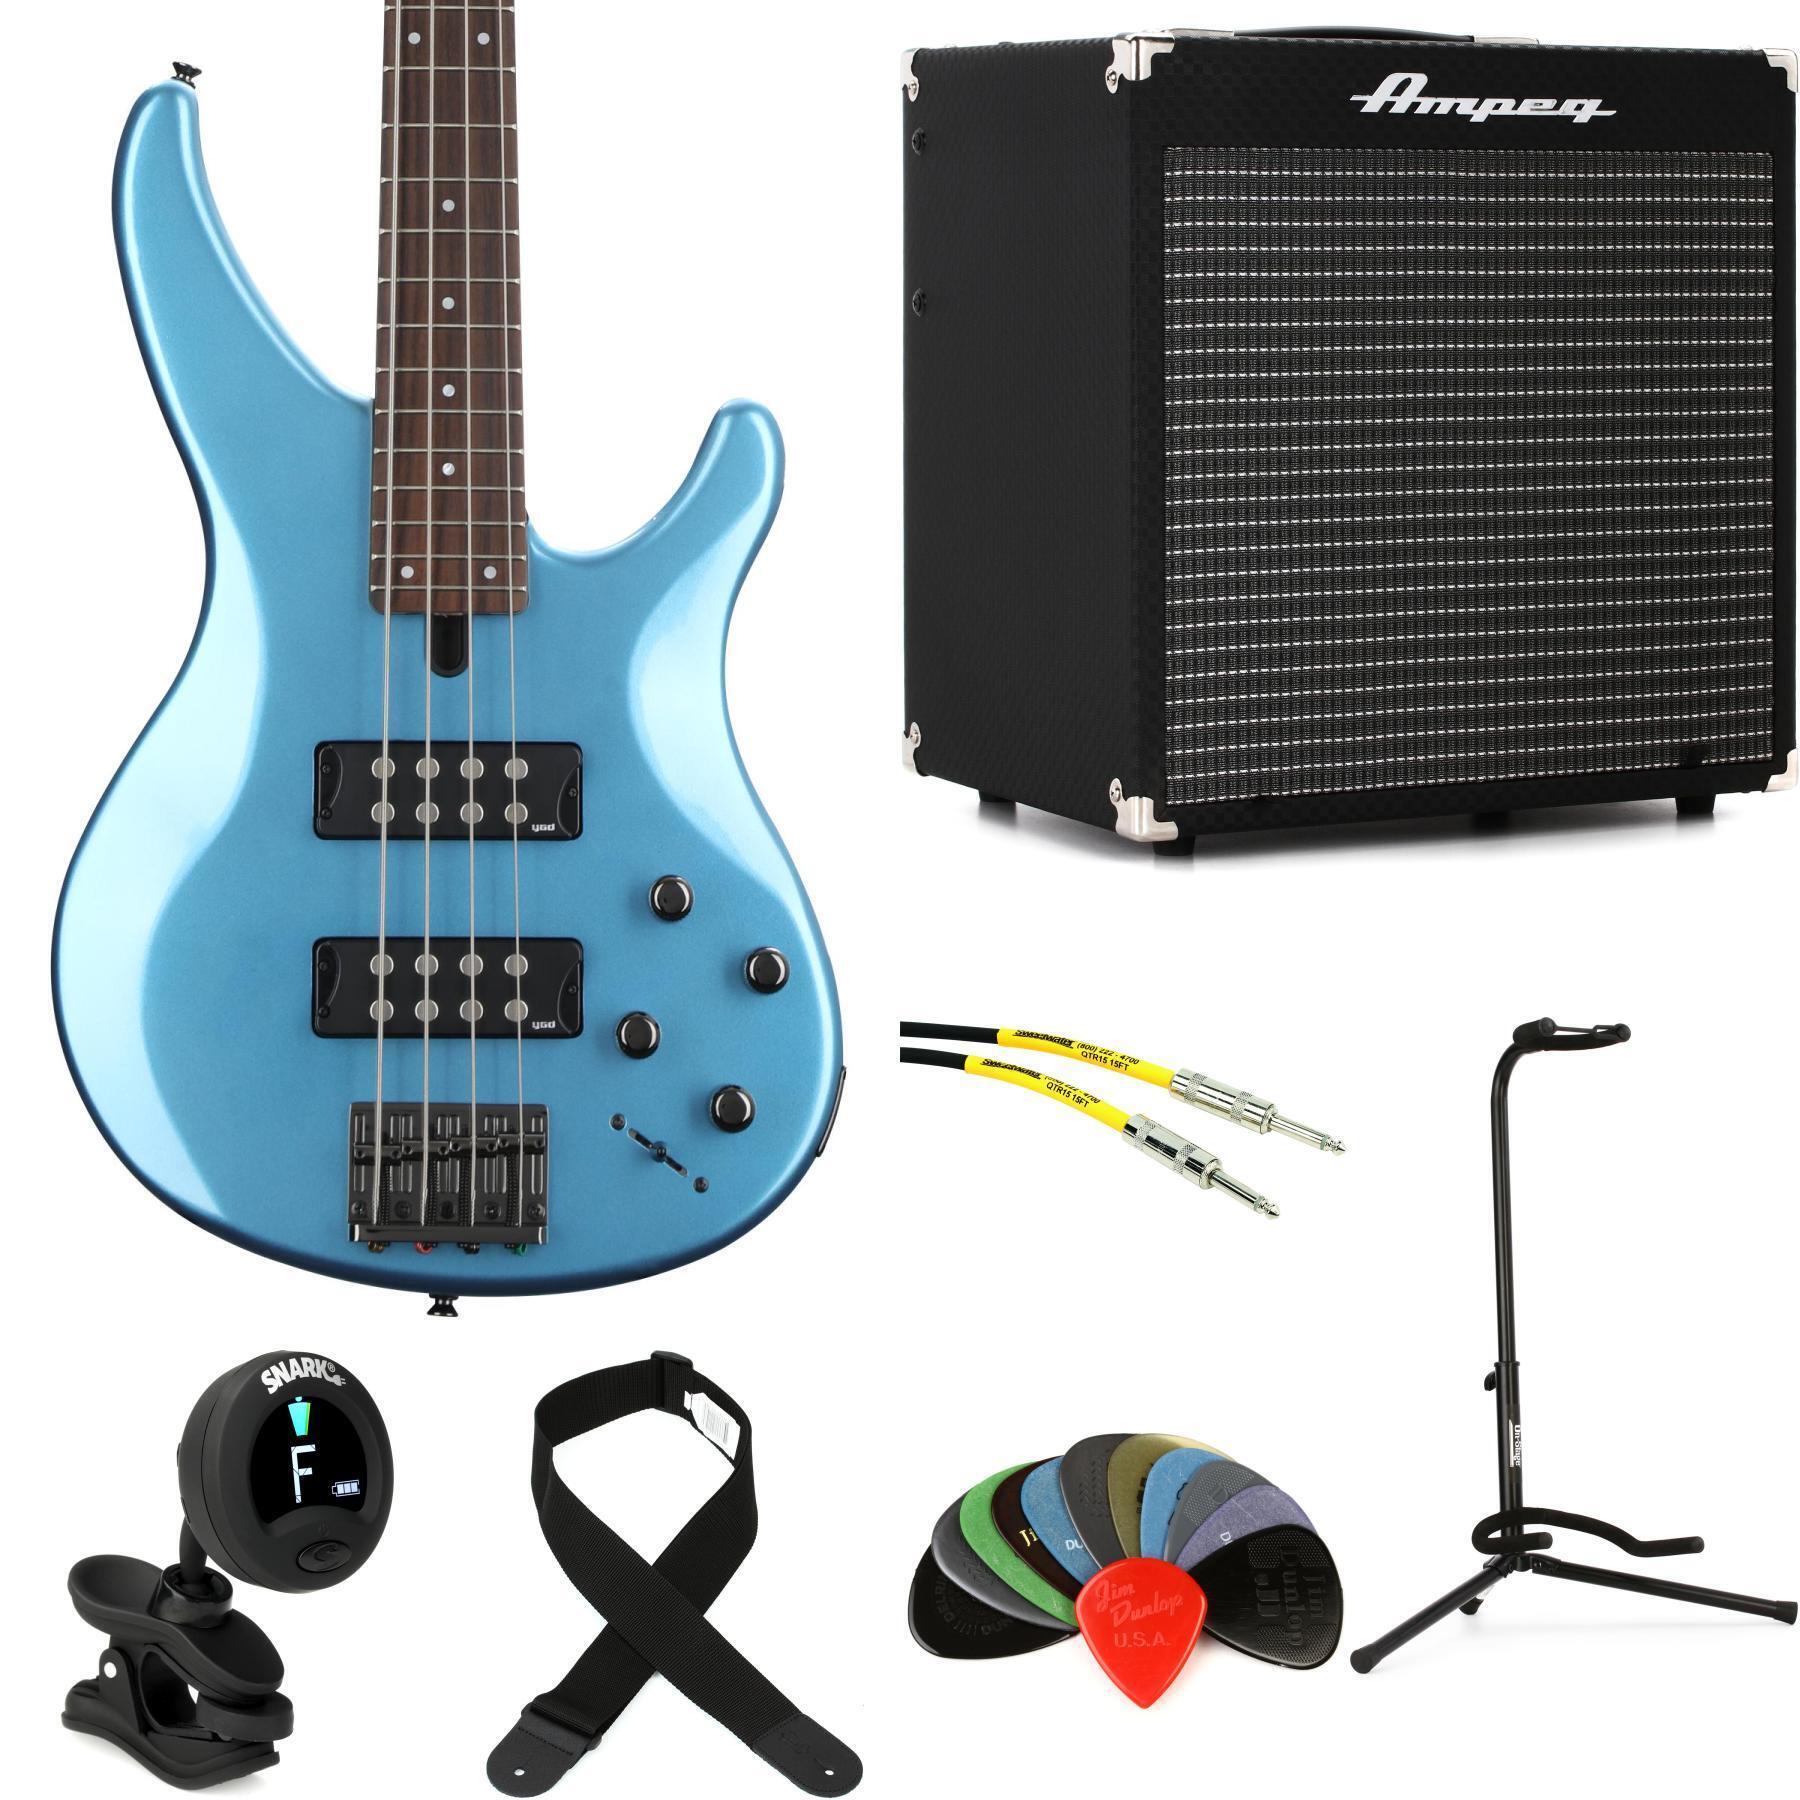 Yamaha TRBX304 Bass Guitar and Ampeg RB-108 Amp Bundle - Factory Blue